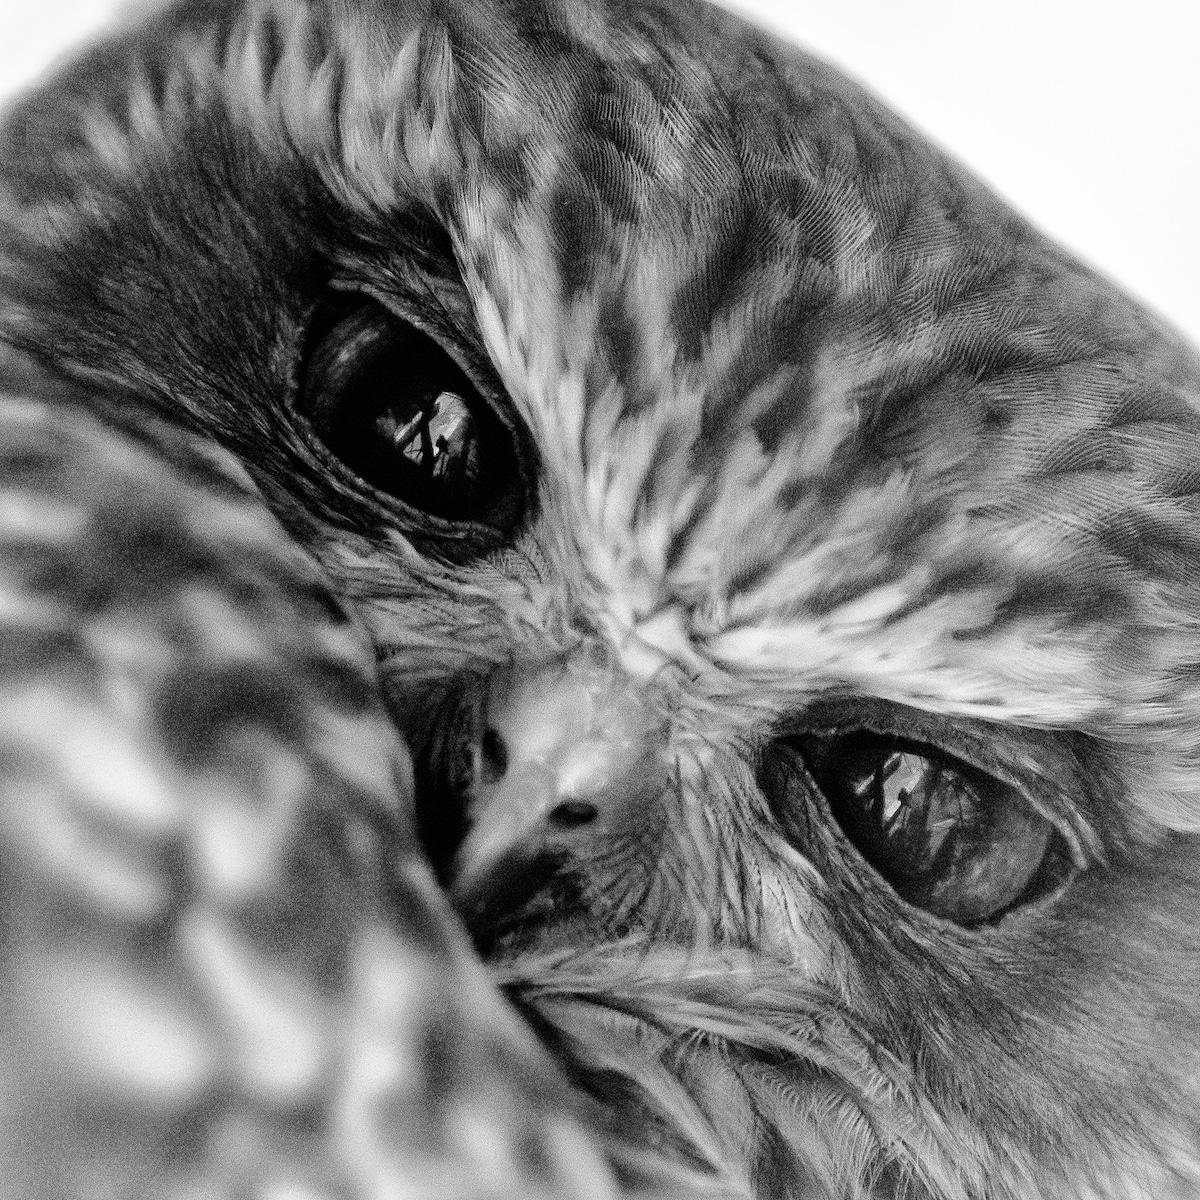 A close up portrait of a wild Australian Boobook Owl